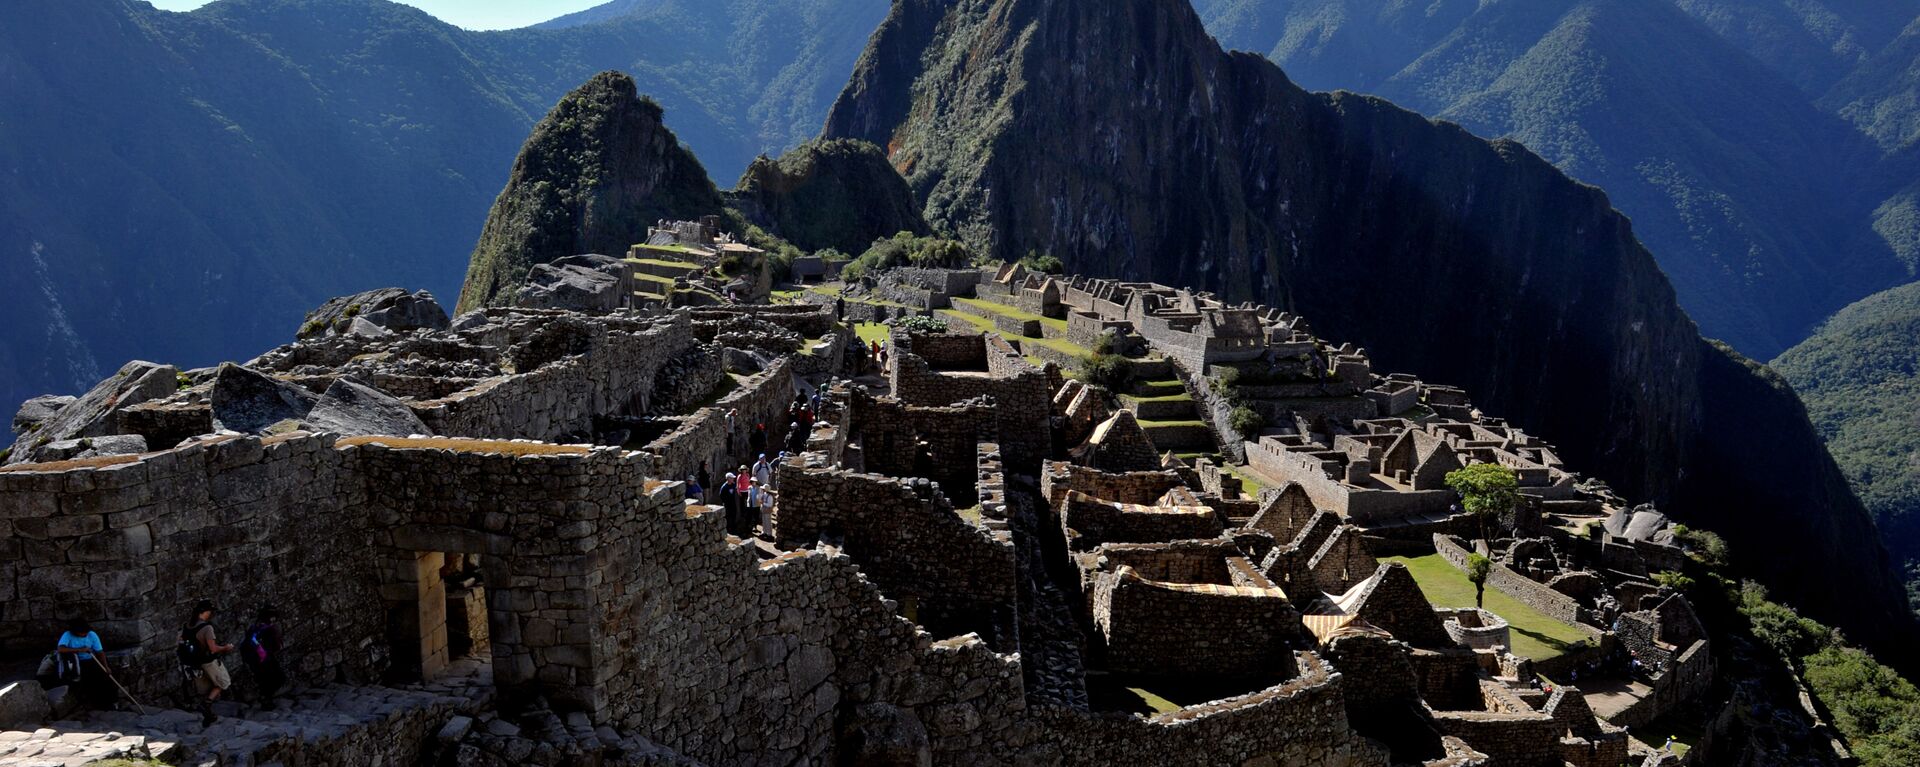 Ruinas de Machu Picchu (imagen de archivo) - Sputnik International, 1920, 14.01.2020